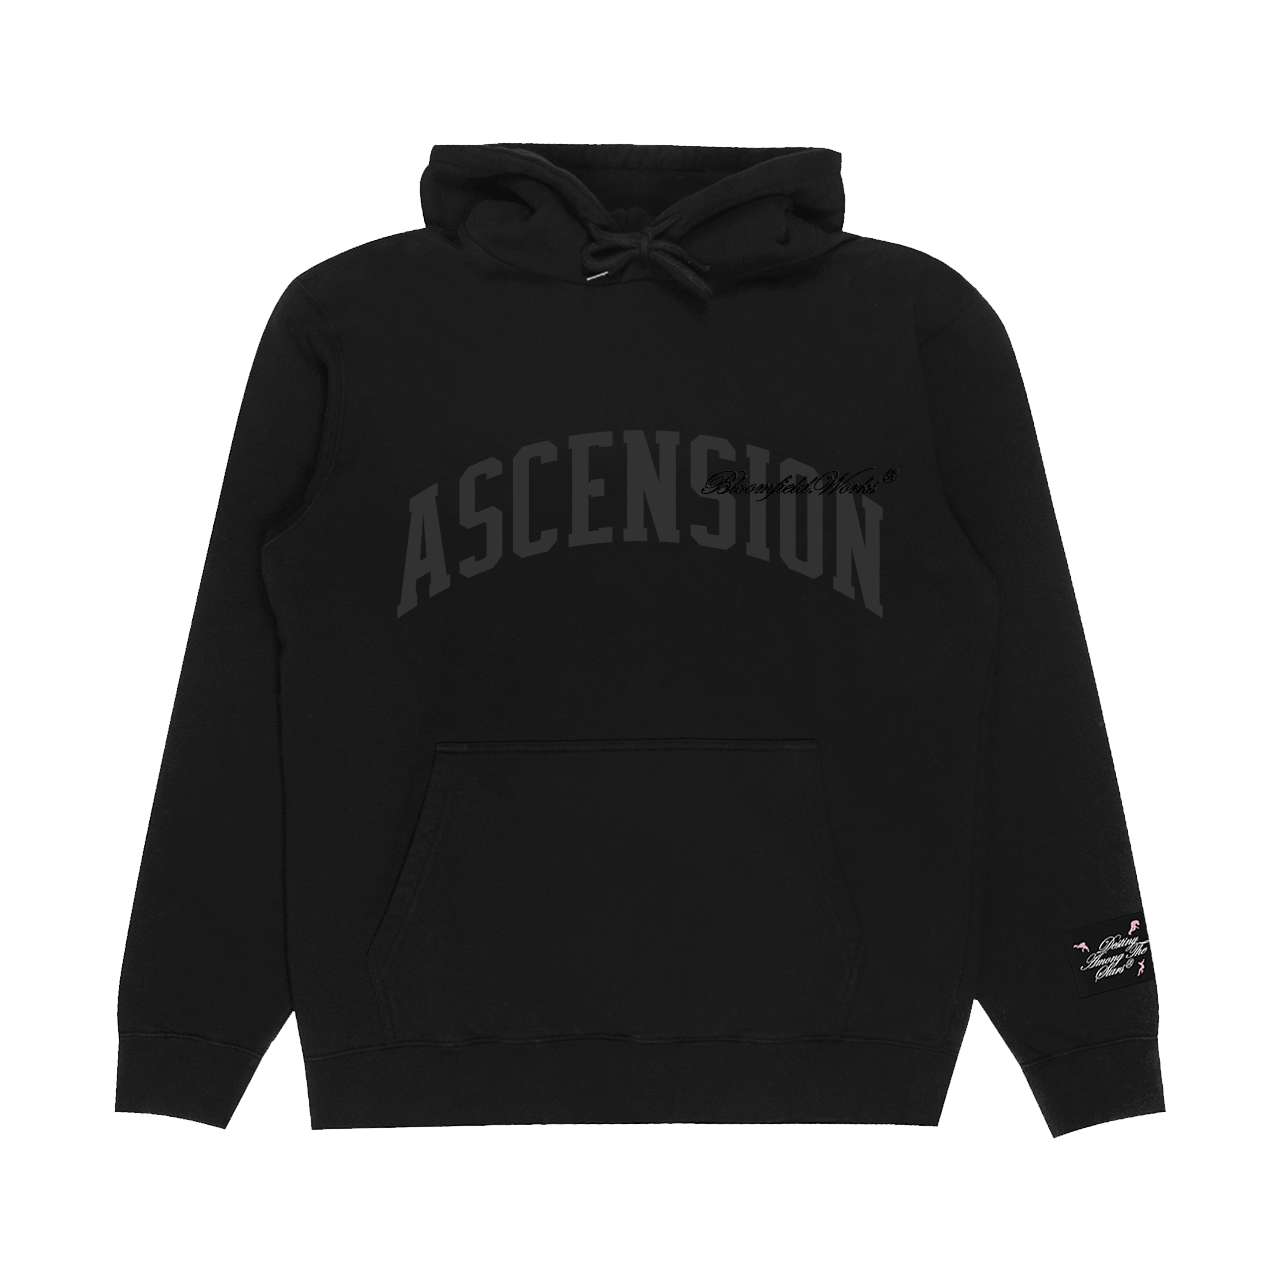 Ascension Organic Hoody